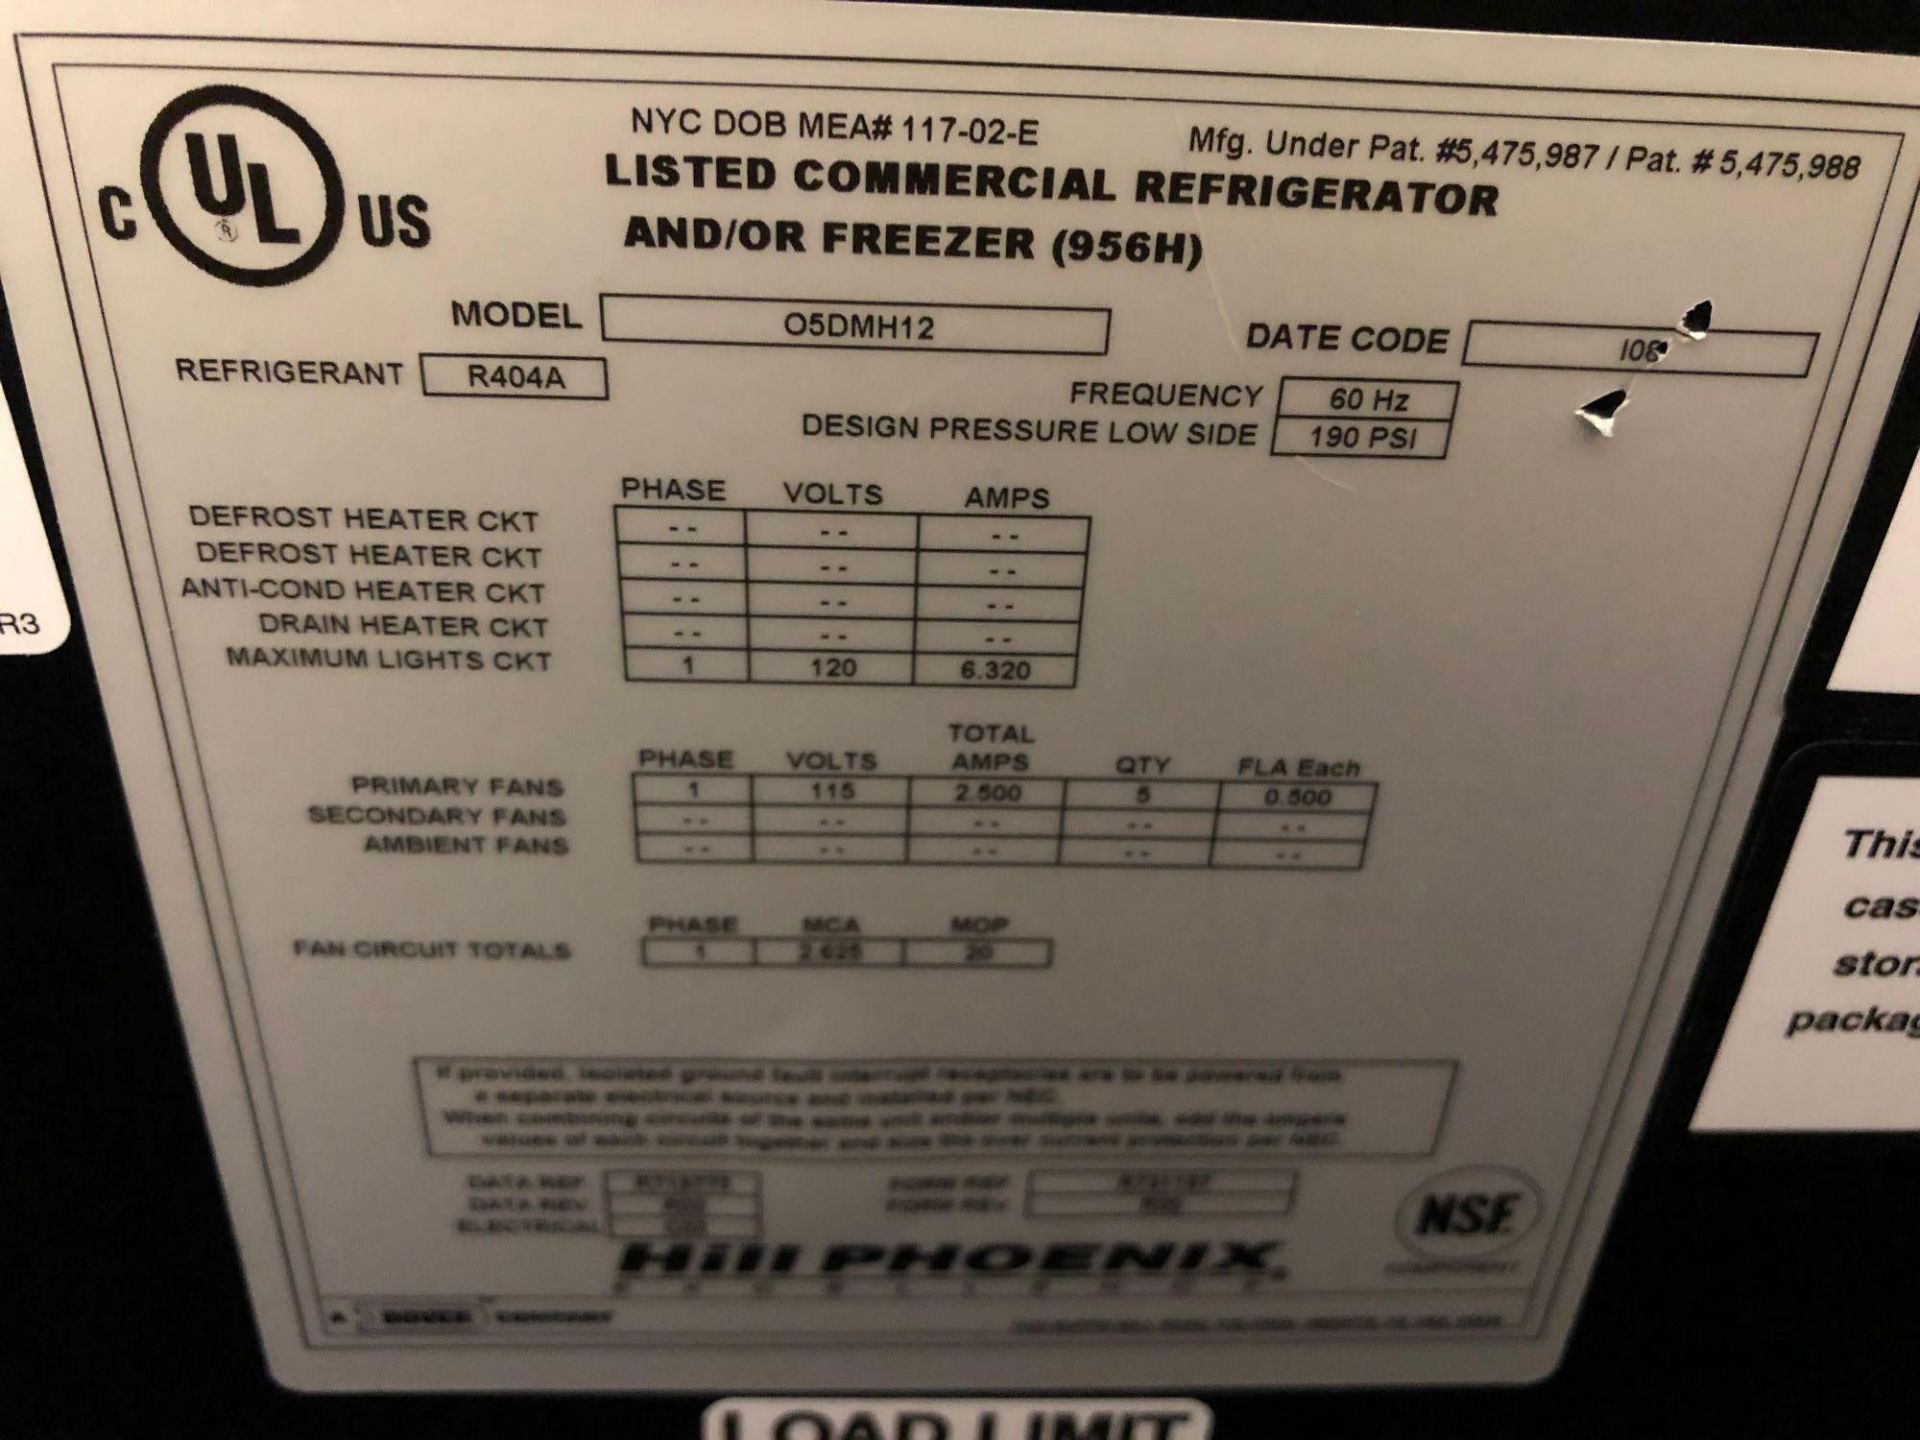 Hill Phoenix Commercial Refrigerator/Freezer Merchandiser - Image 6 of 6